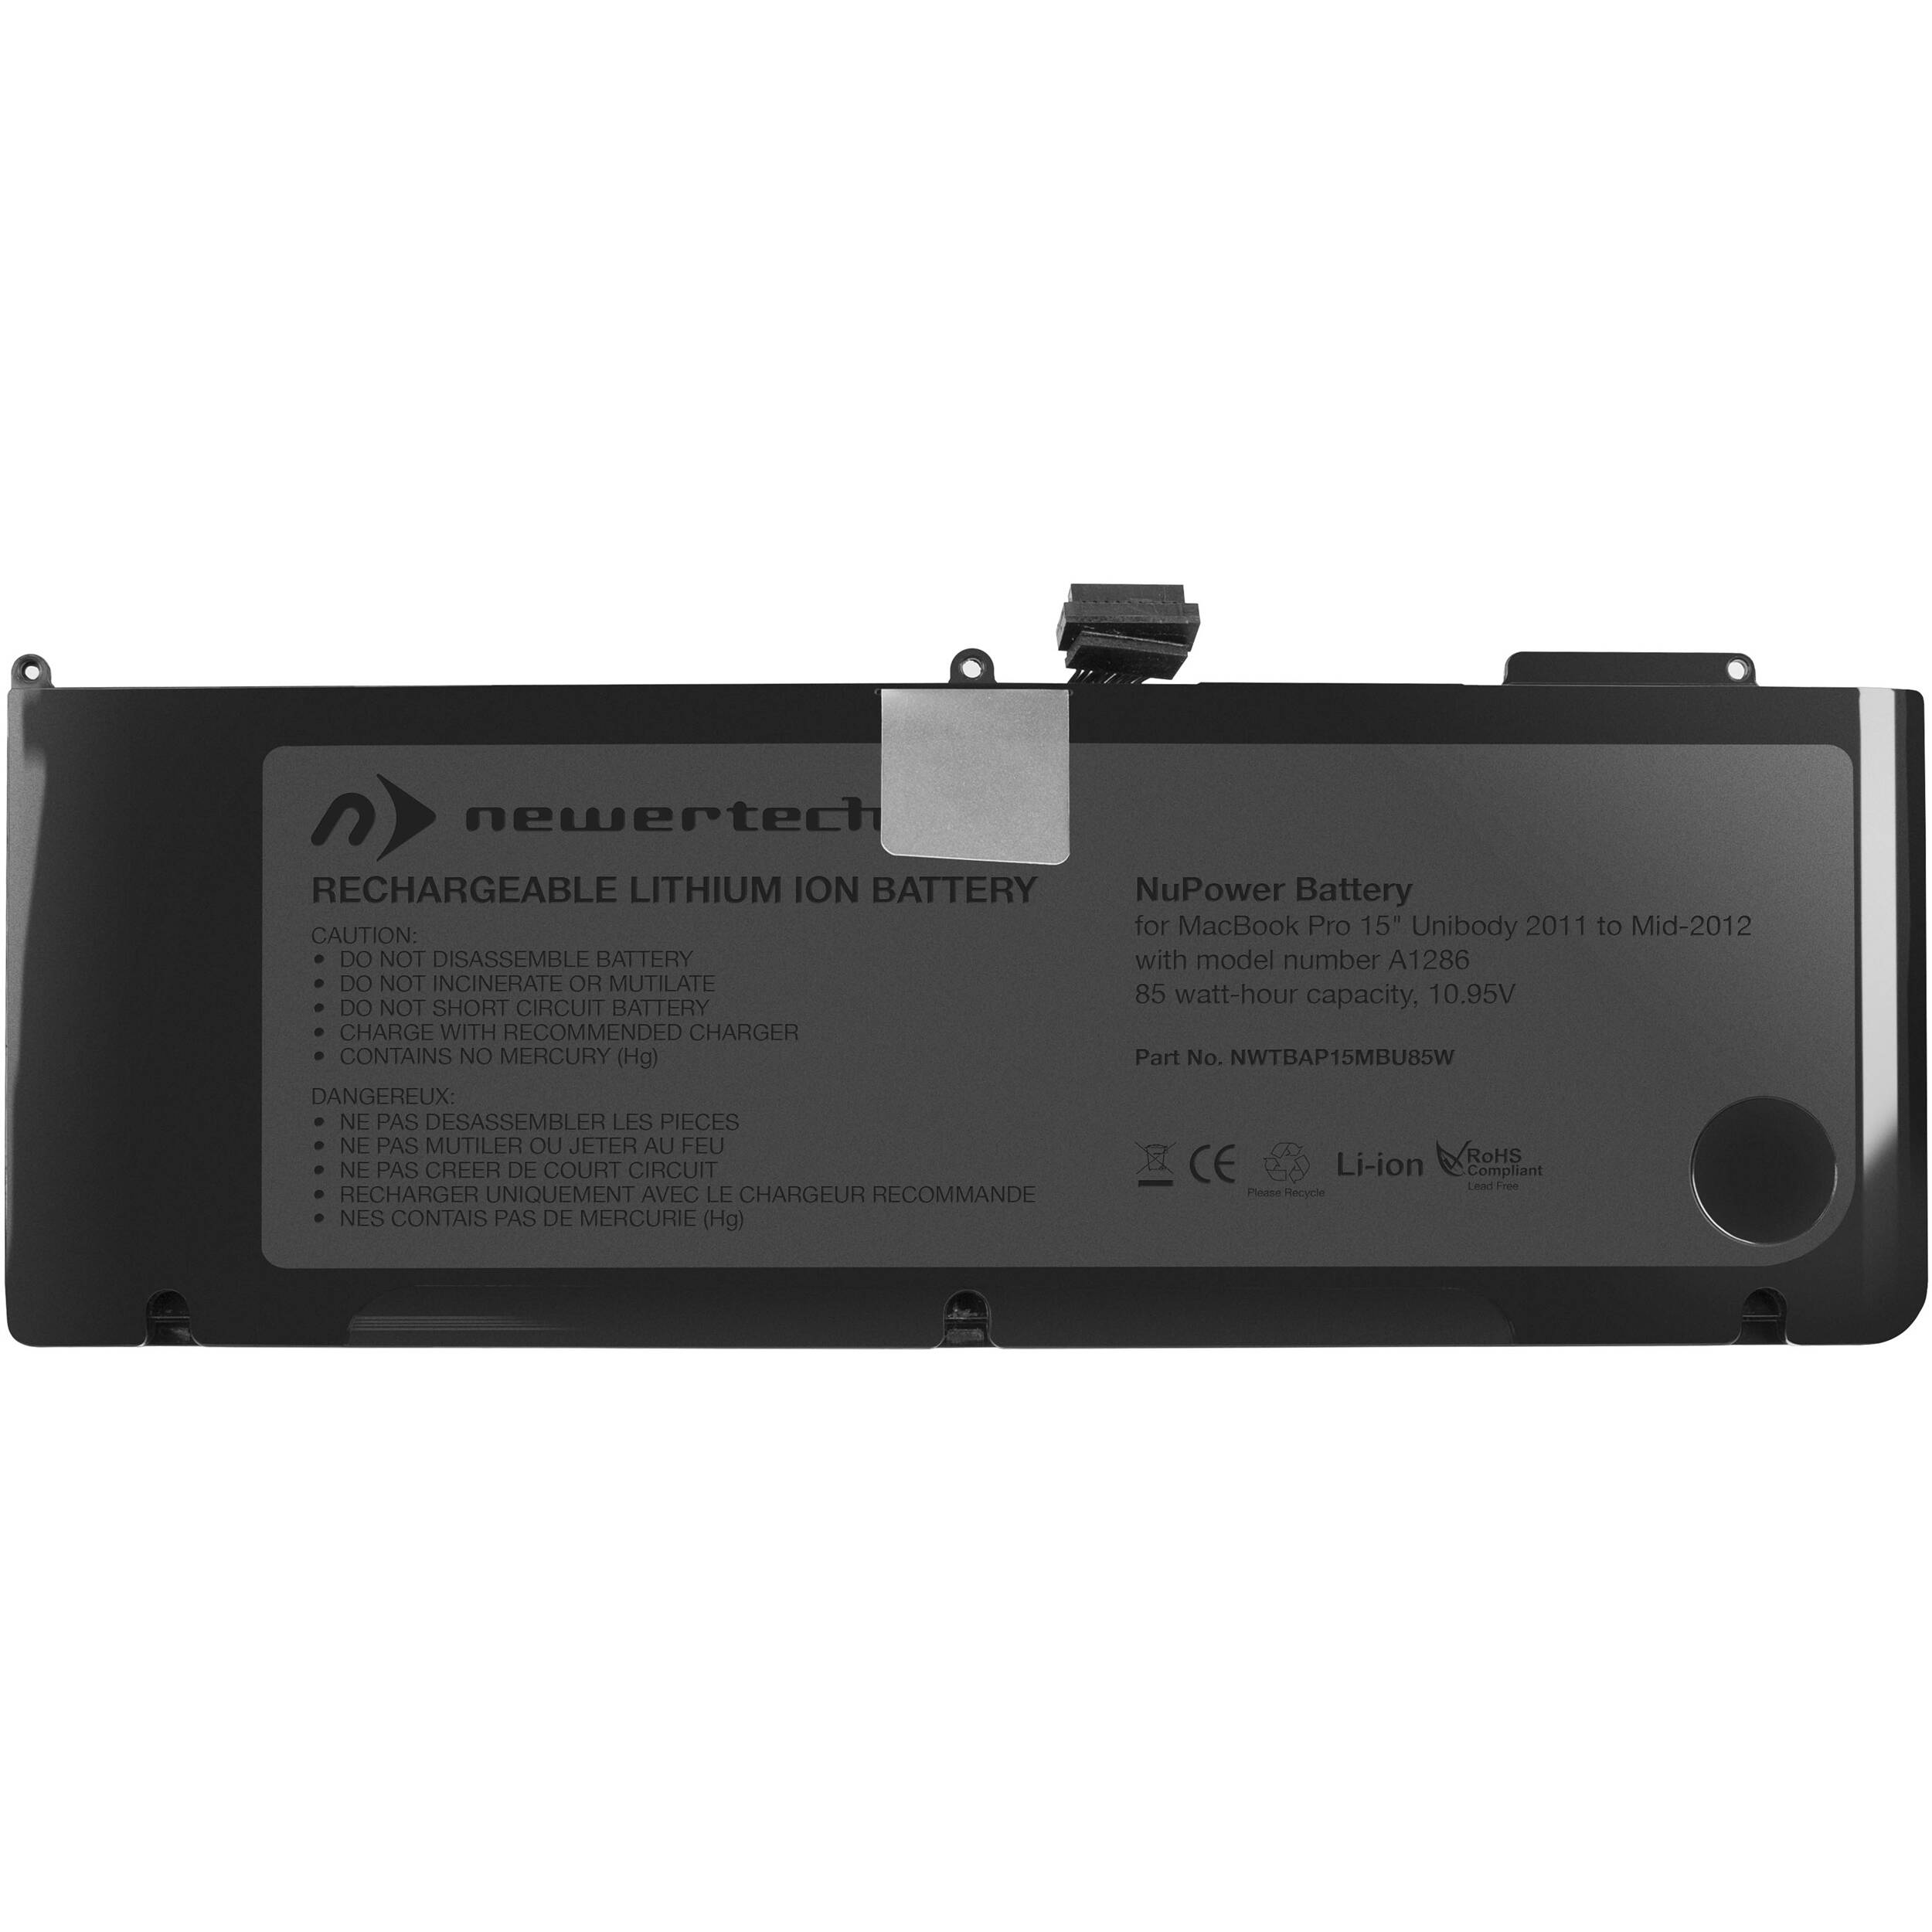 Newertech Nupower 85wh Battery Replacement Nwtbap15mbu85w B H